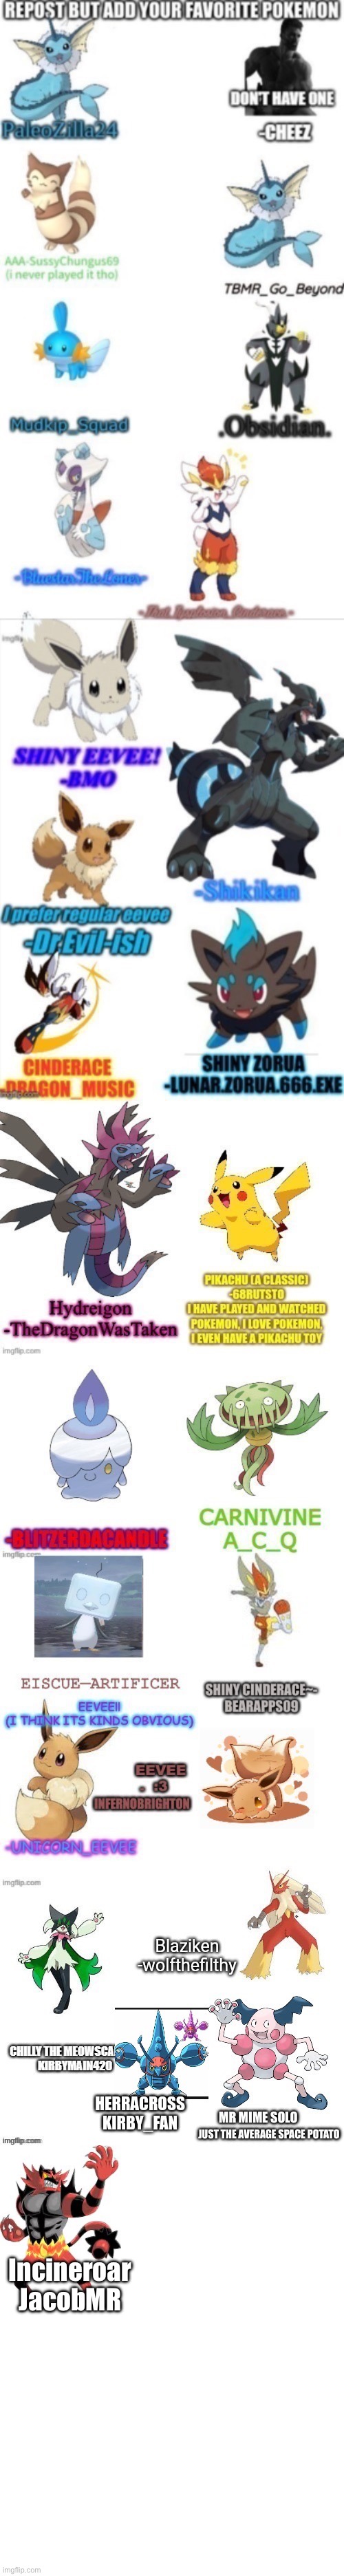 My favorite Pokémon changed based on my mood, I just remember Incineroar being my first favorite | Incineroar
JacobMR | image tagged in pokemon | made w/ Imgflip meme maker